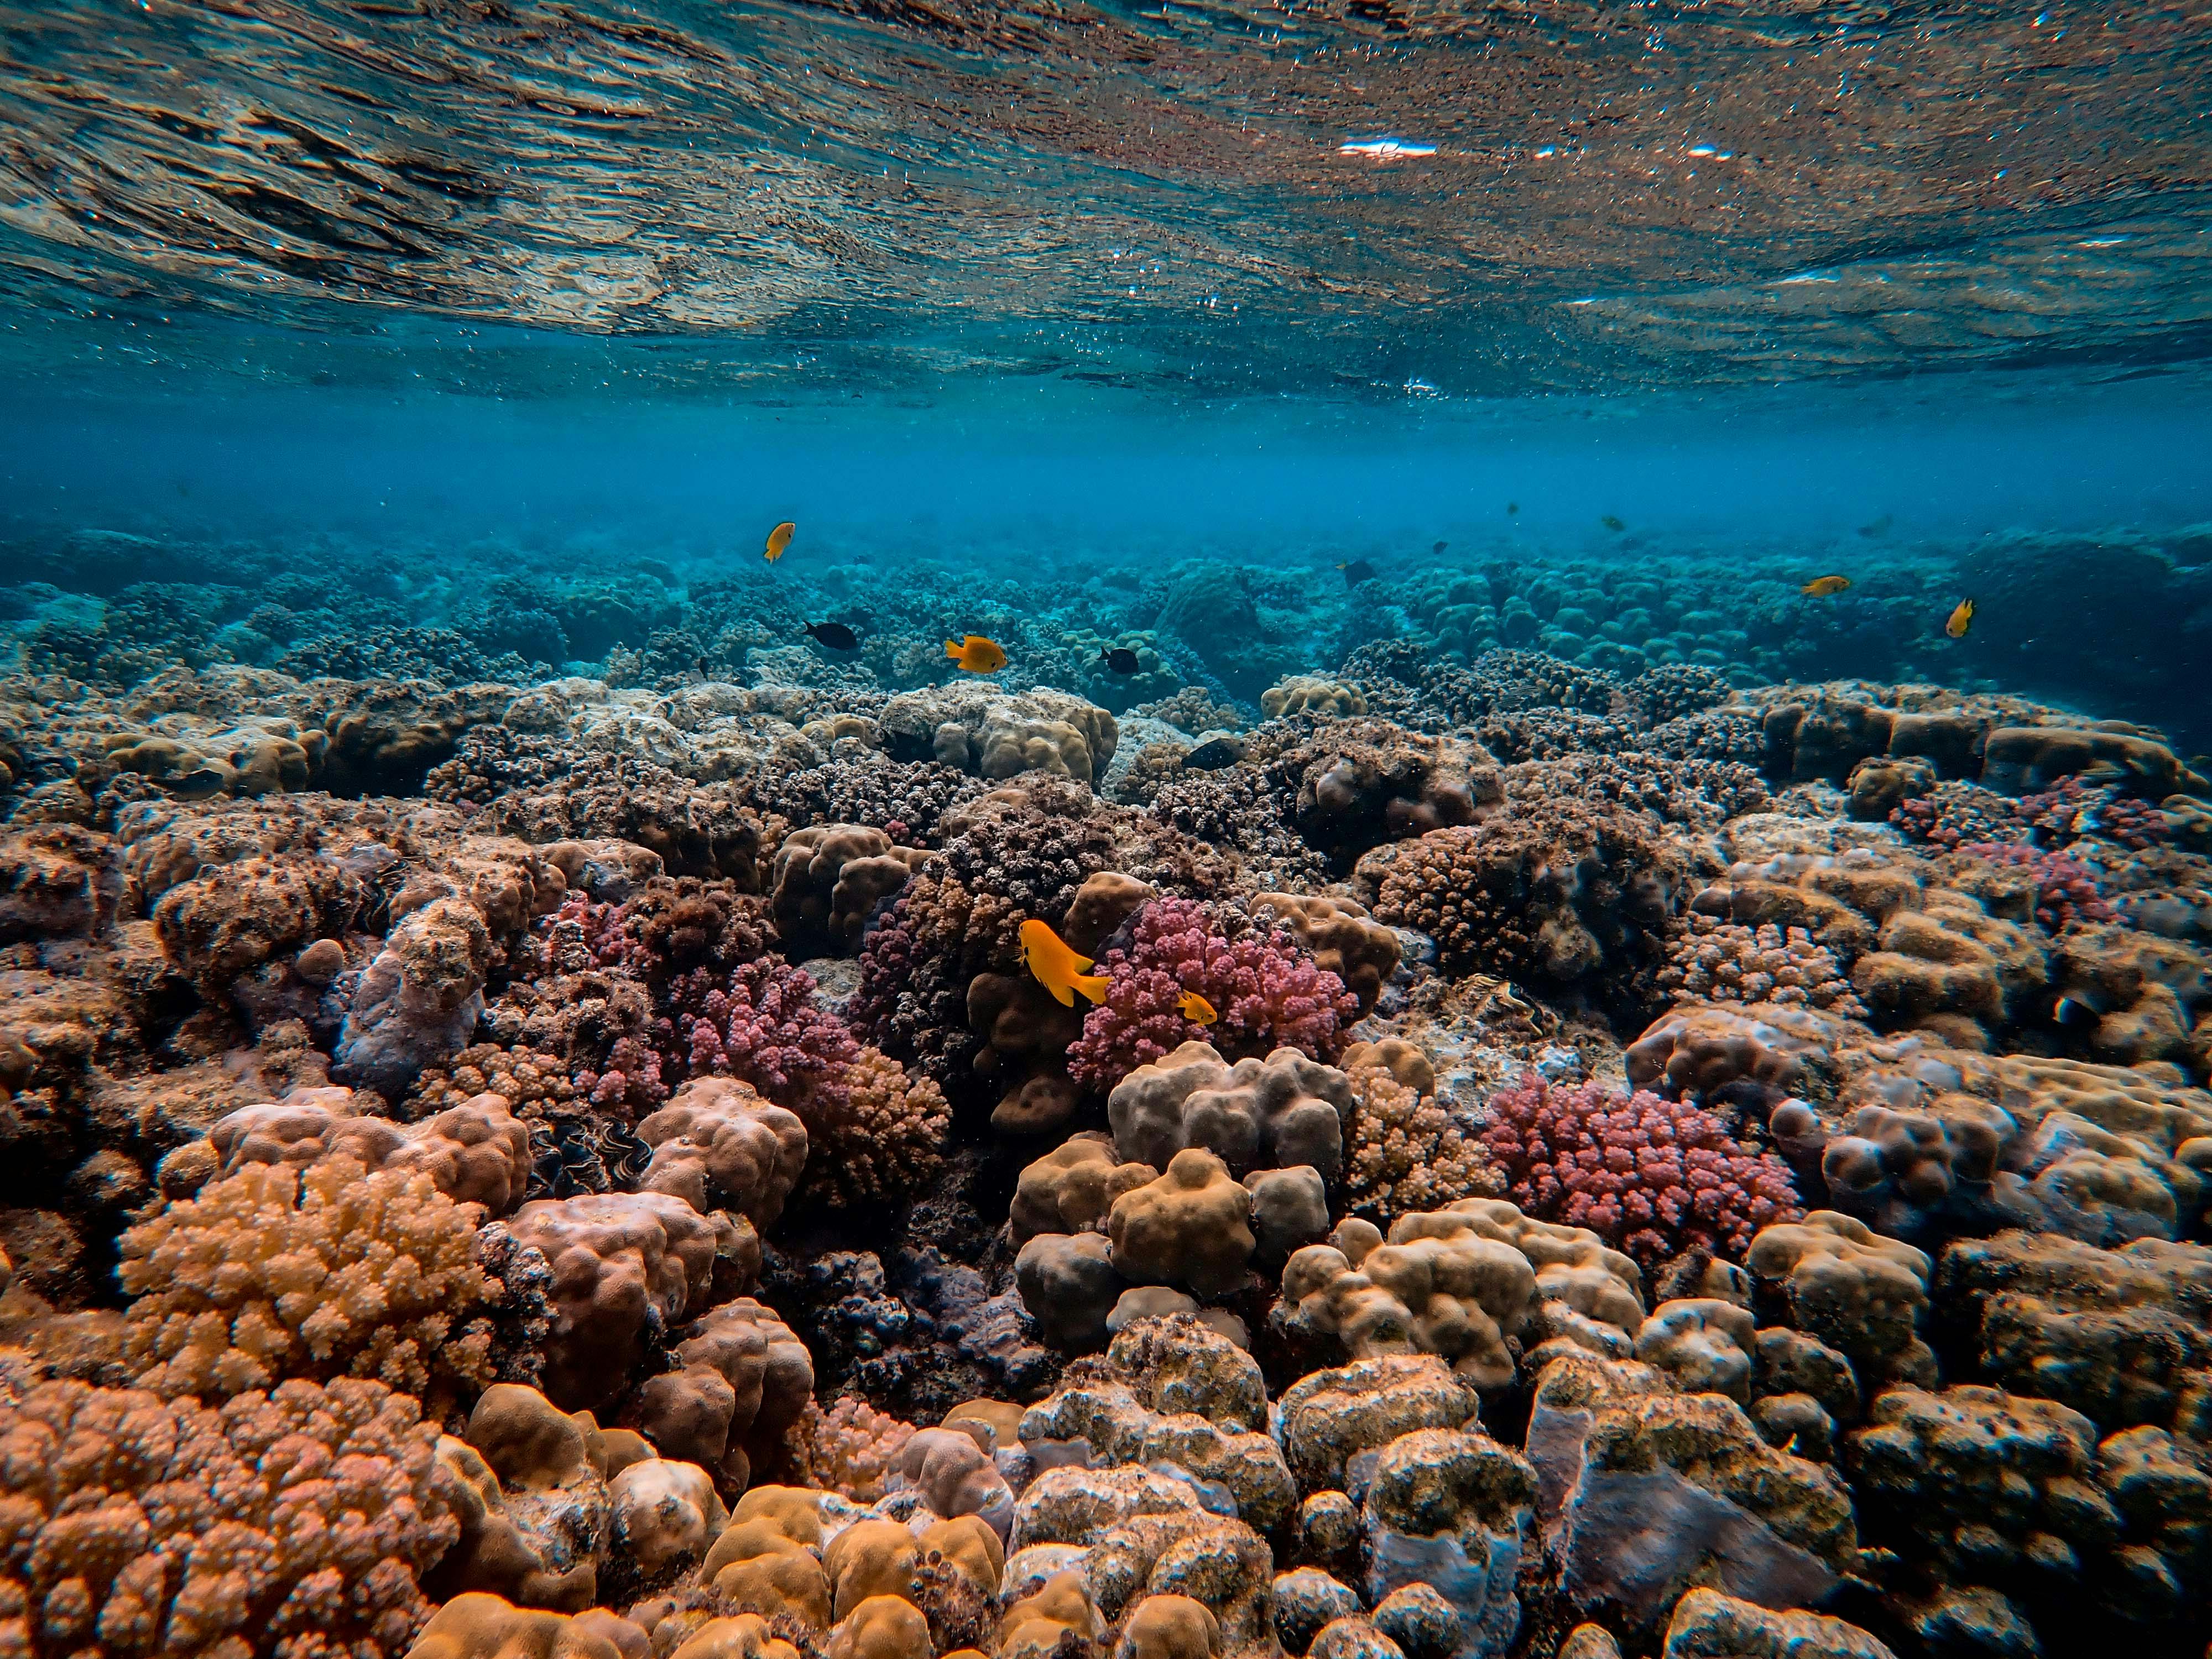 hd coral reef wallpaper